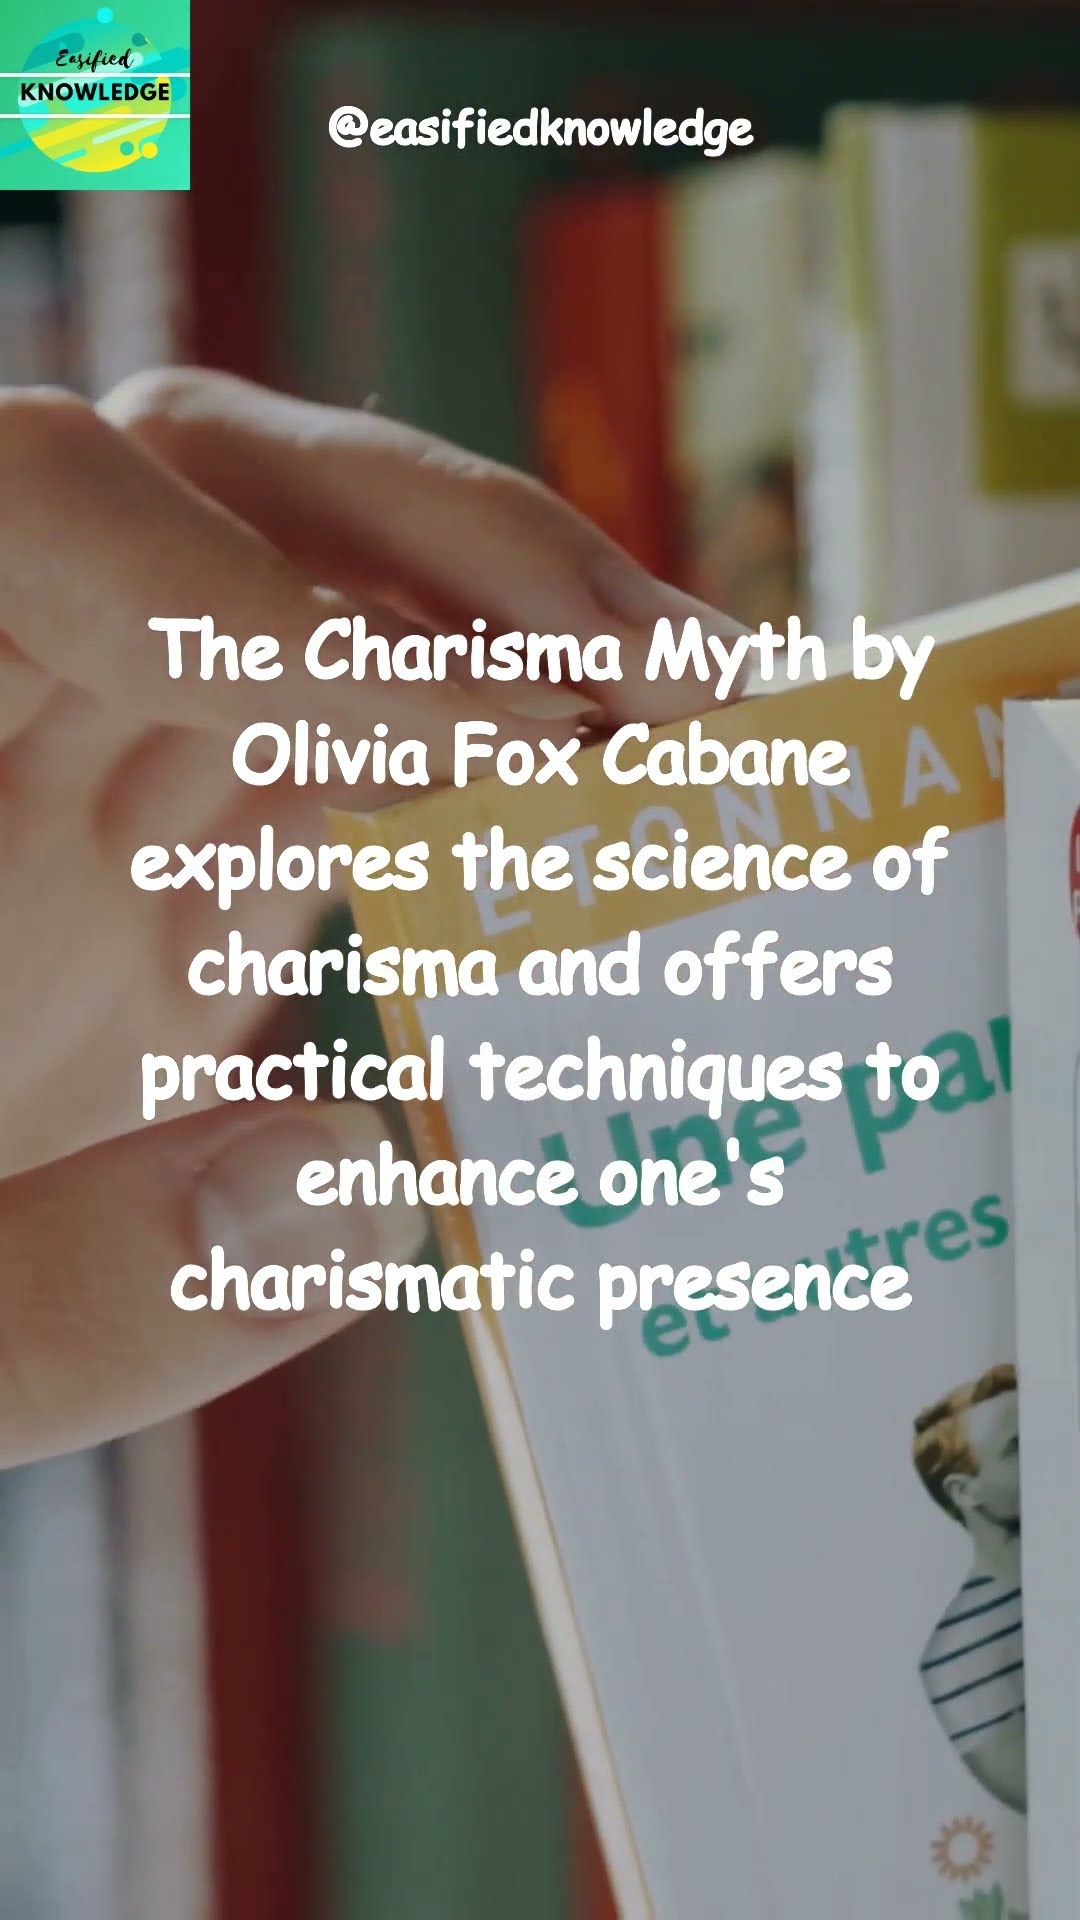 Summary of the The Charisma M by Olivia Fox Cabane #CharismaMyth #CharismaticPresence #Confidence